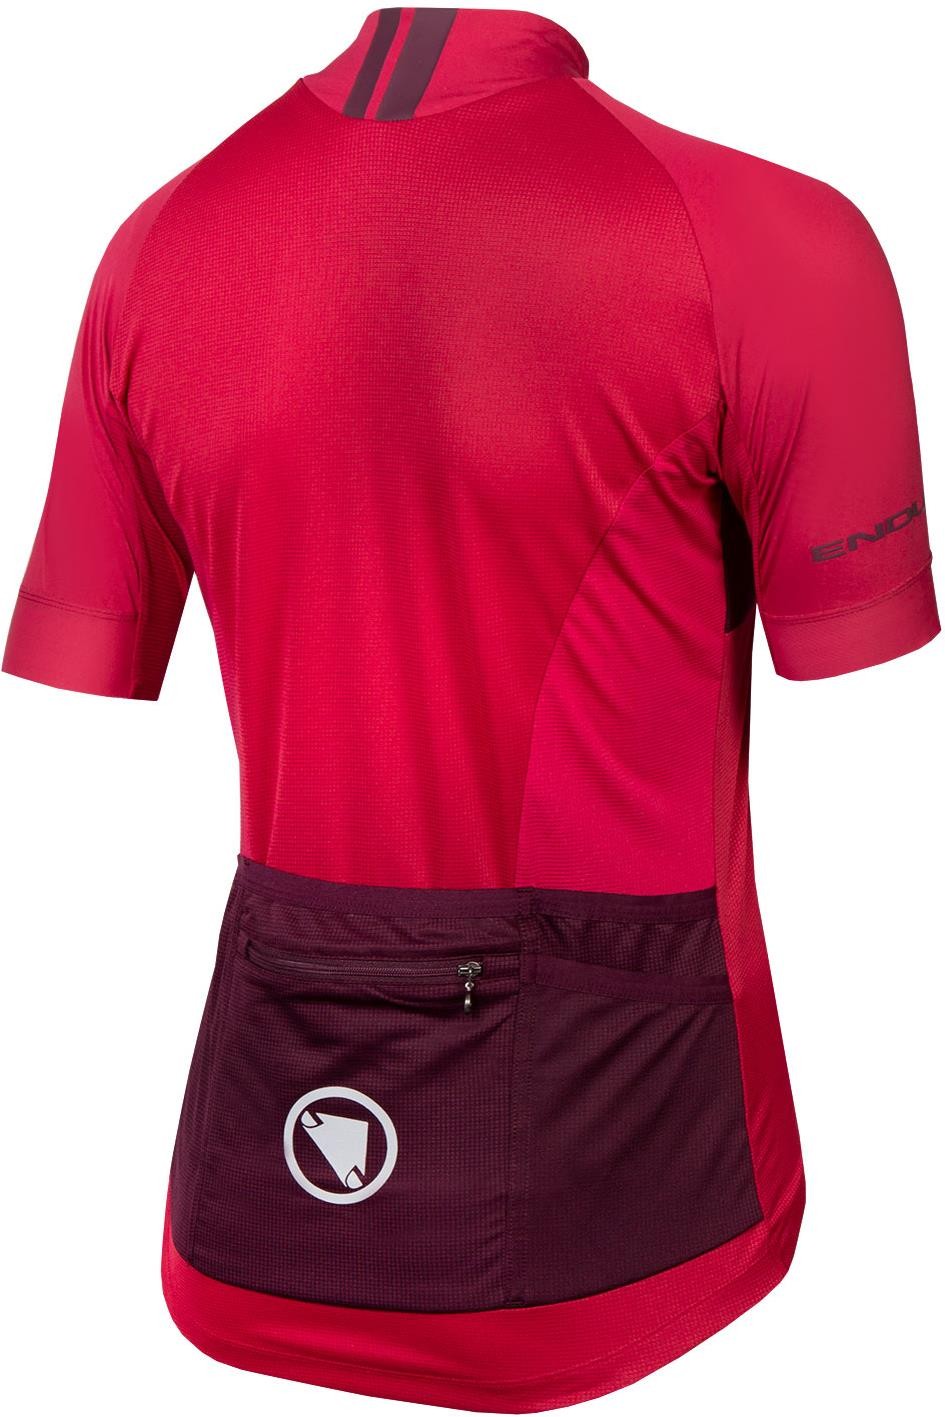 FS260-Pro Womens Short Sleeve Cycling Jersey image 1